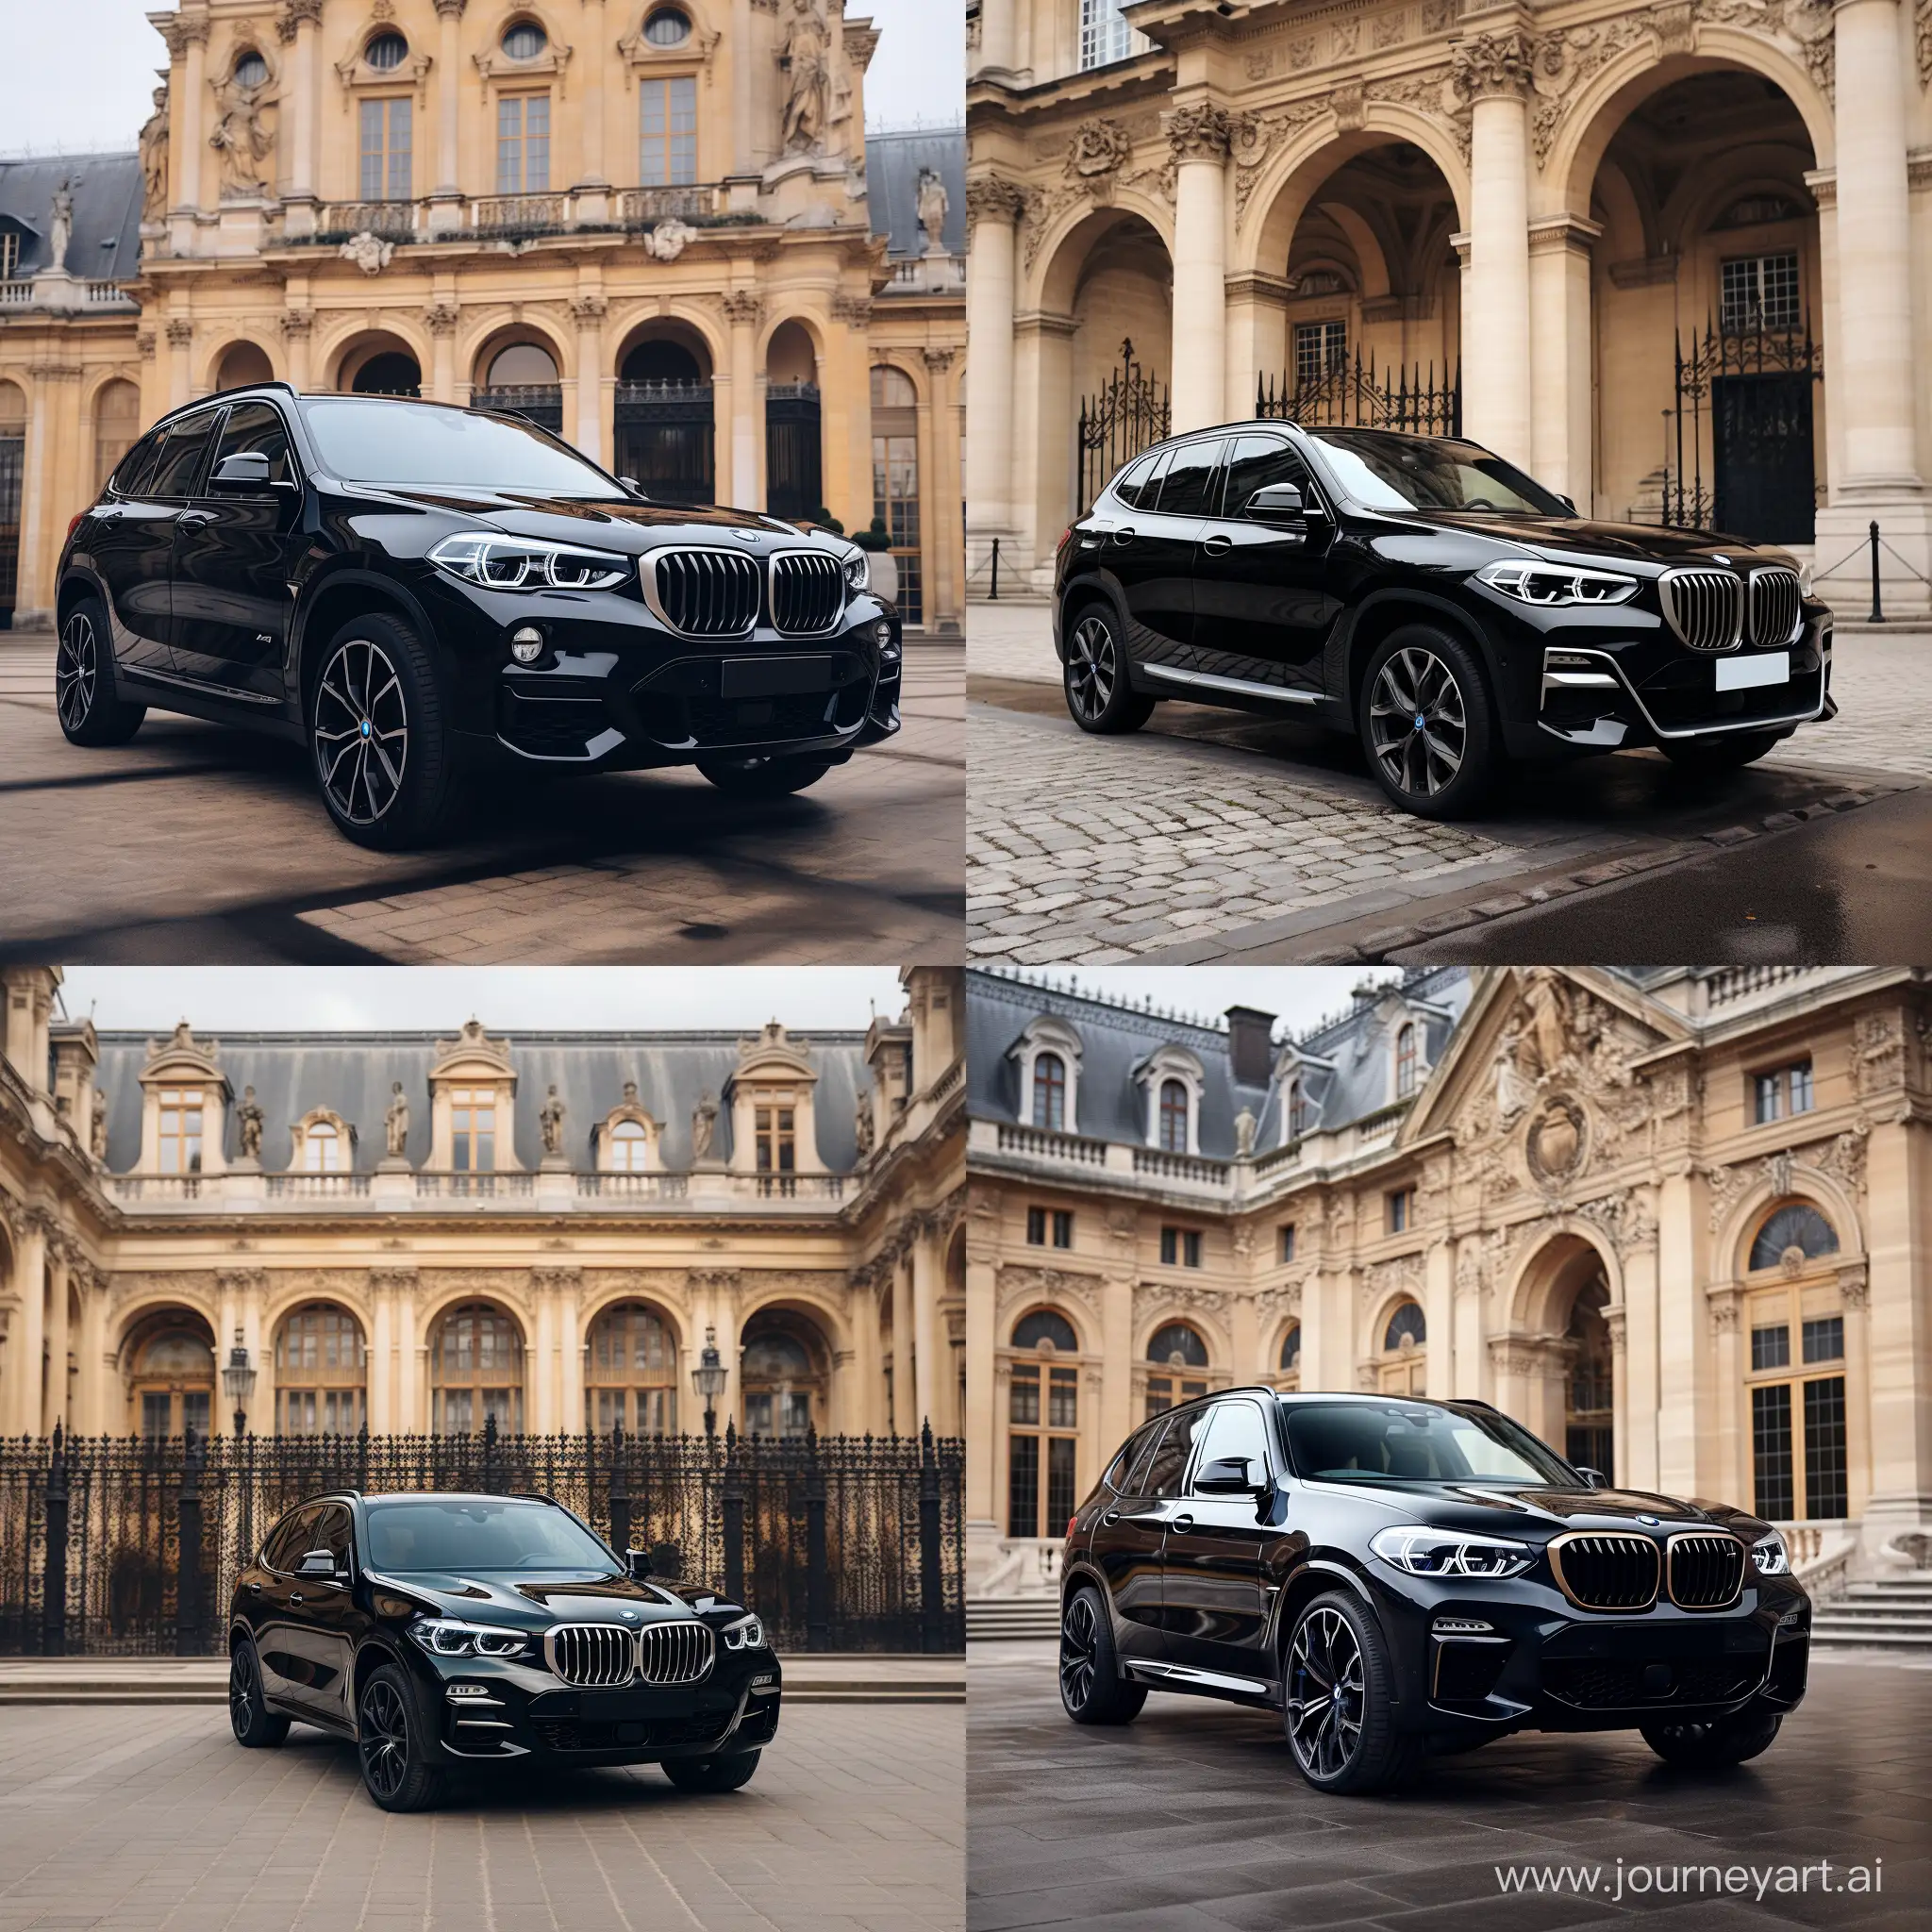 Luxurious-Black-BMW-X3-at-Elyse-Palace